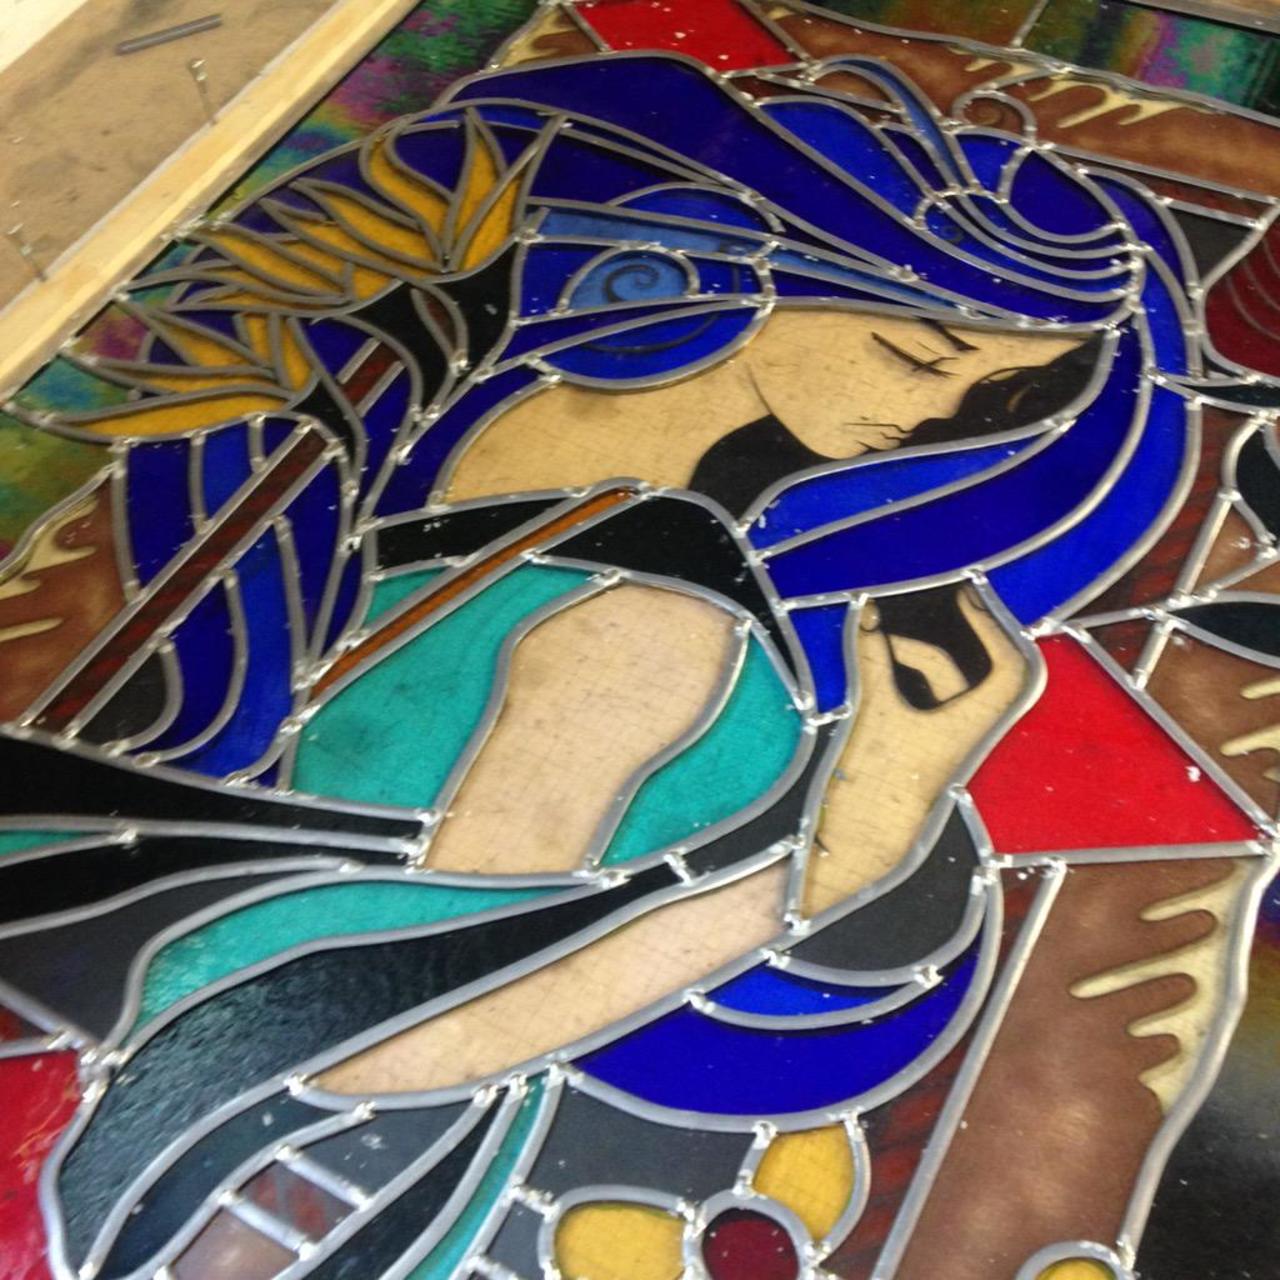 RT @inkiegraffiti: New Stained Glass piece taking shape with Tom Spencer :-) #stainedglass #graffiti #streetart #monikerartfair http://t.co/O6trl9xvYR